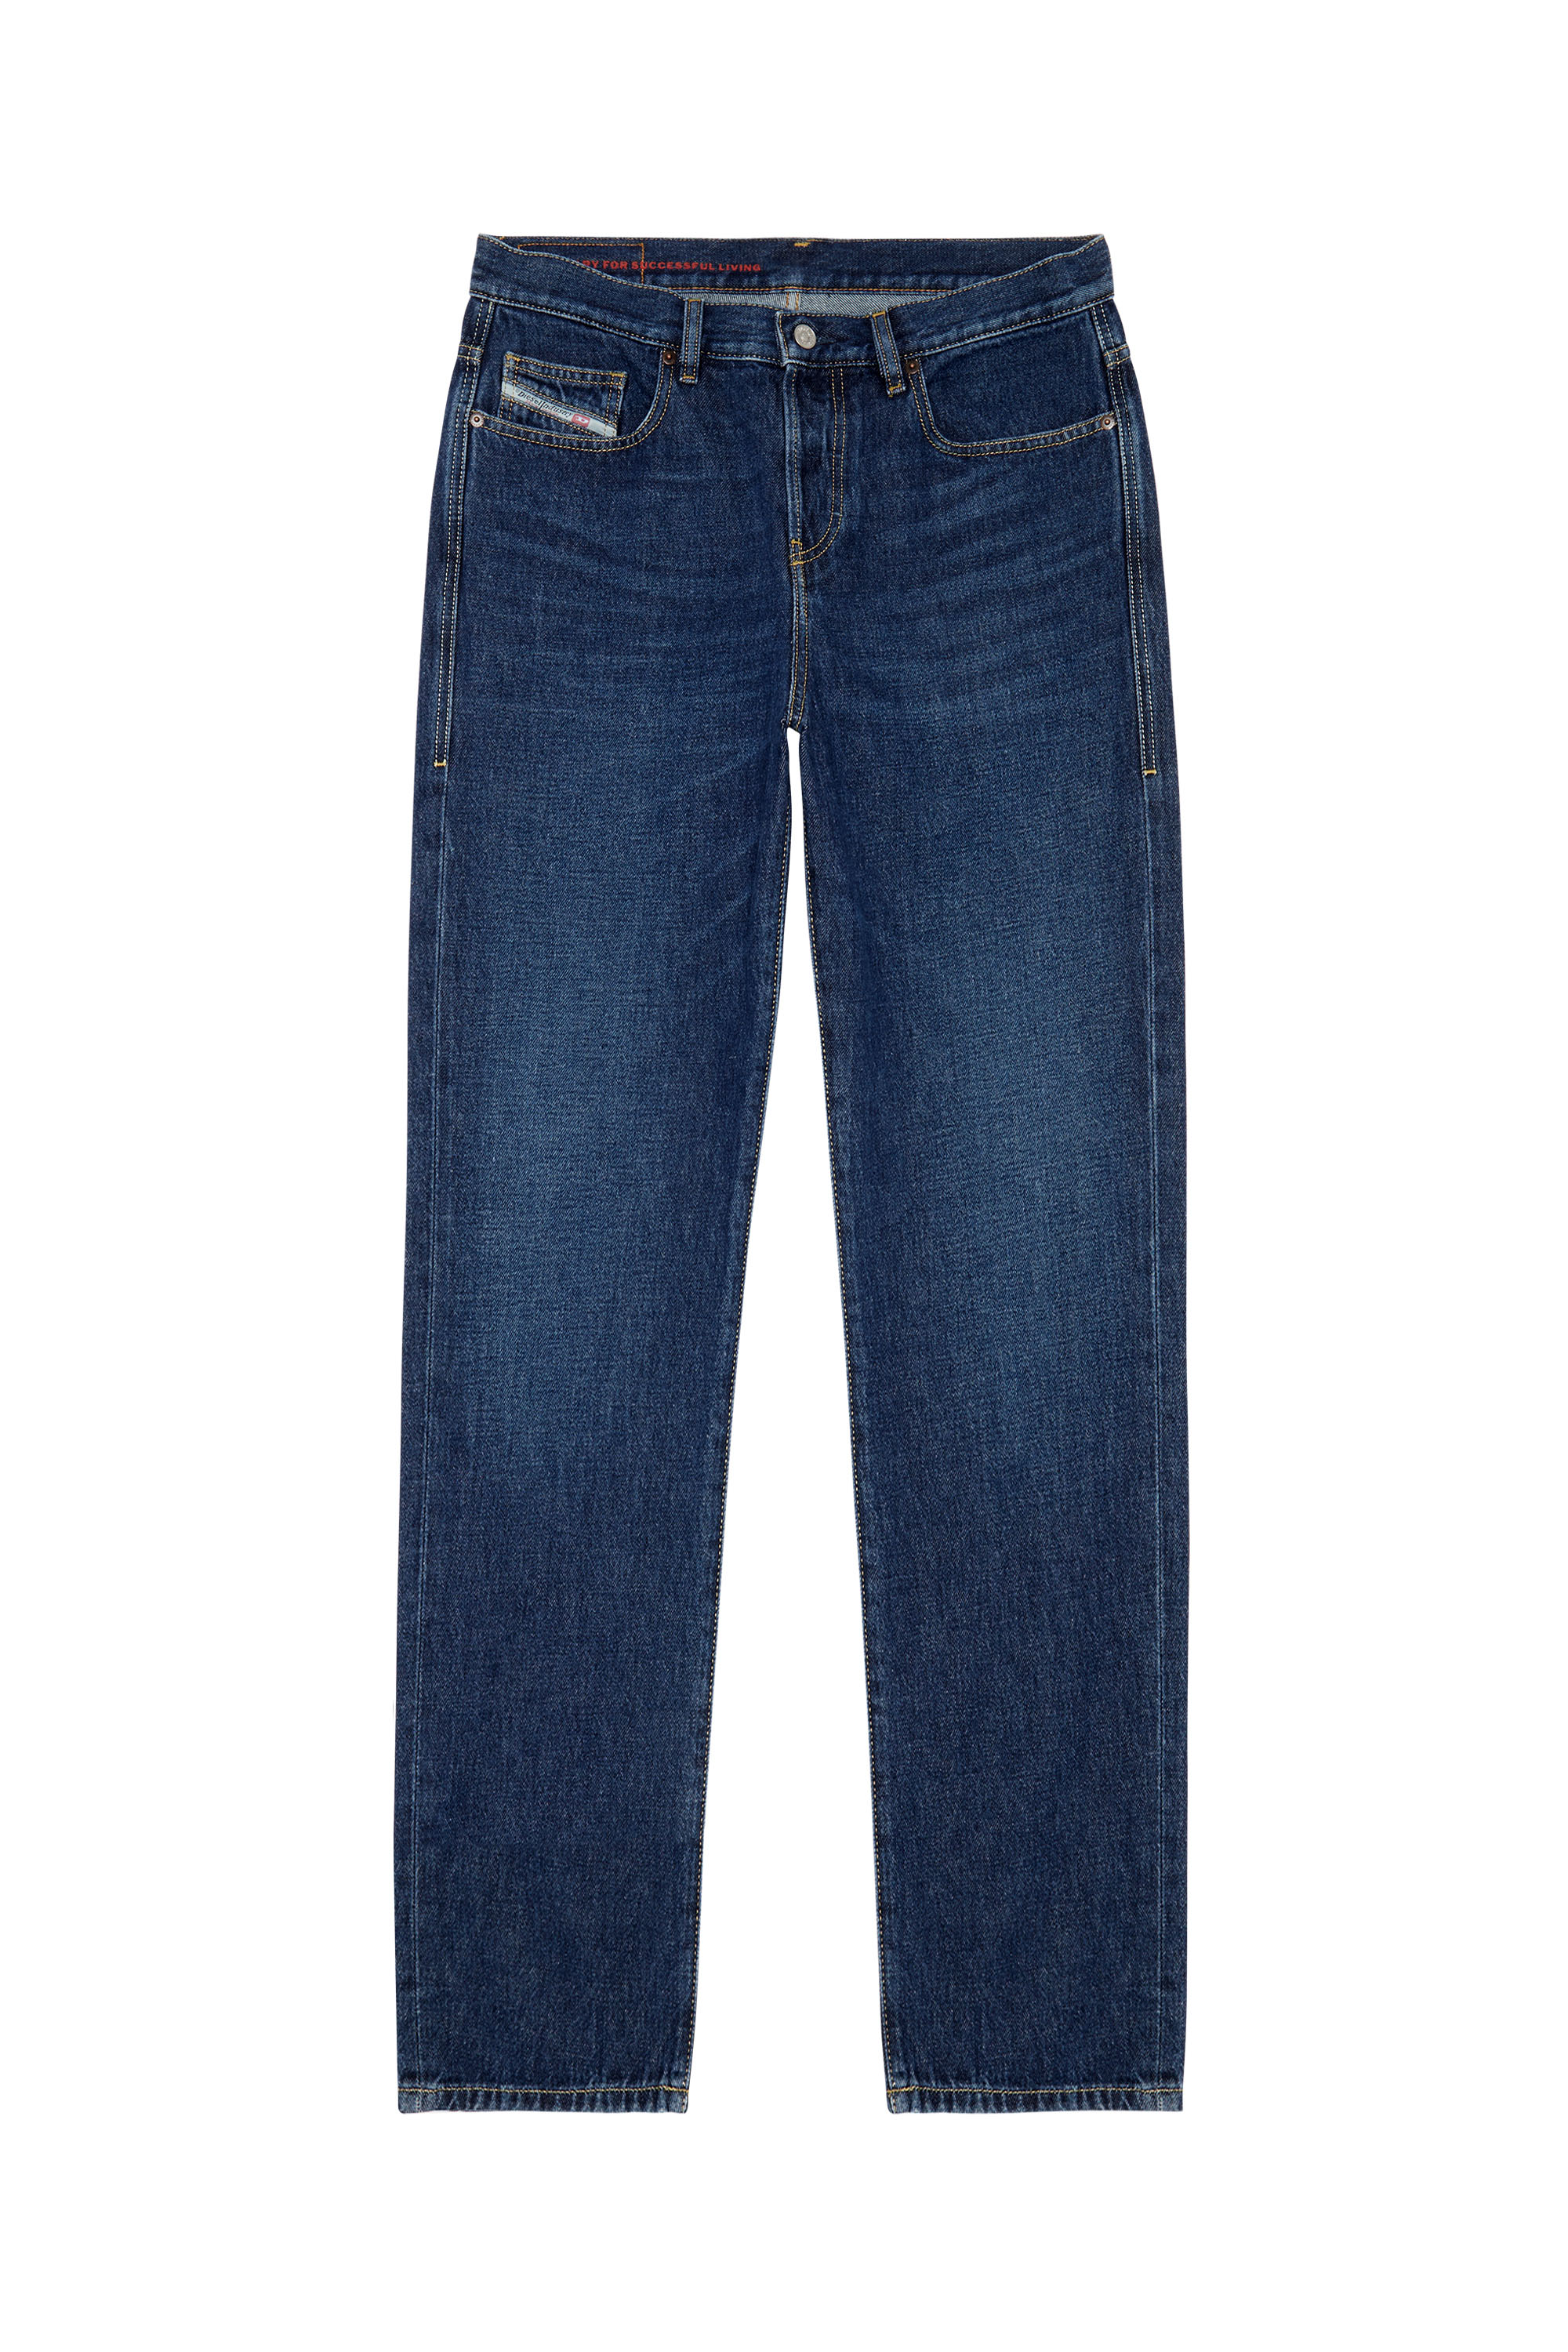 2020 D-VIKER 09C03 Straight Jeans, Azul Oscuro - Vaqueros